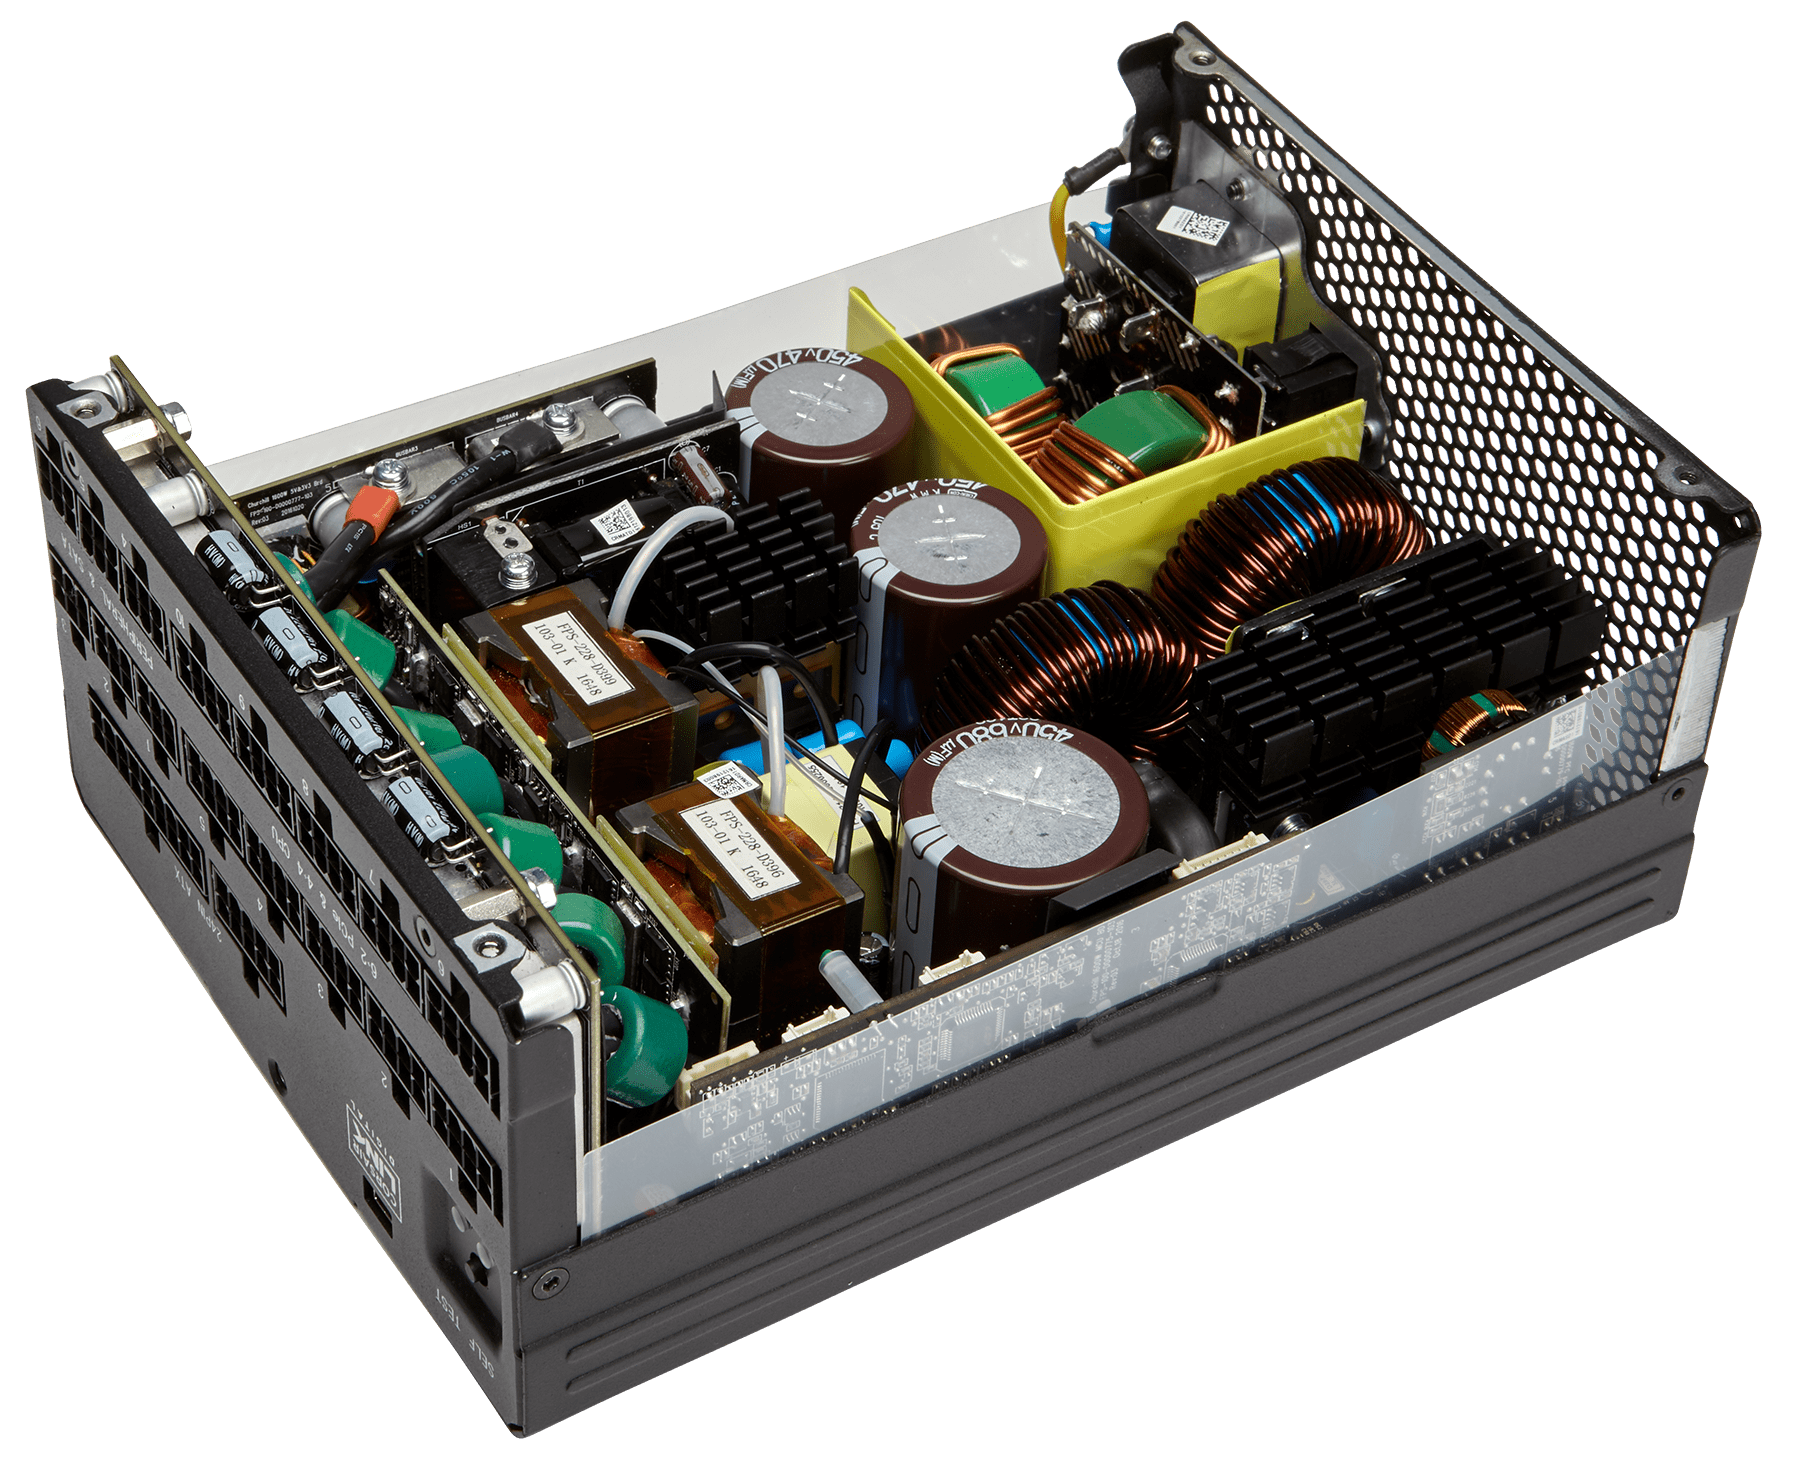 AX1600i Digital ATX Power Supply — 1600 Watt Fully-Modular PSU